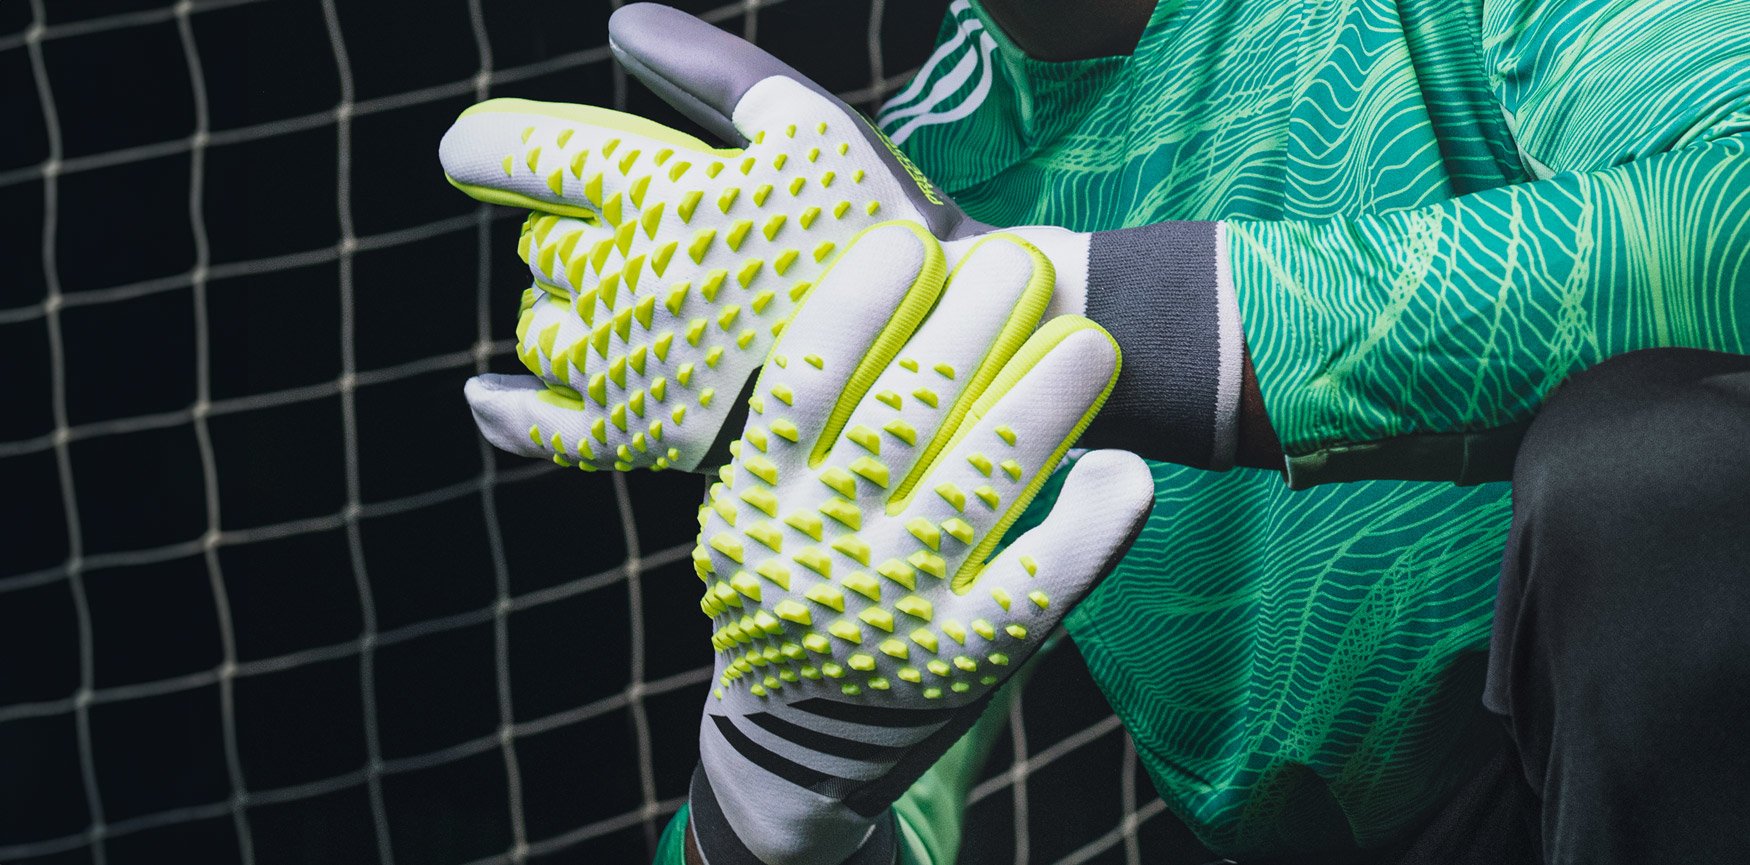 adidas Goalkeeper Gloves featuring the adidas Predator Pro